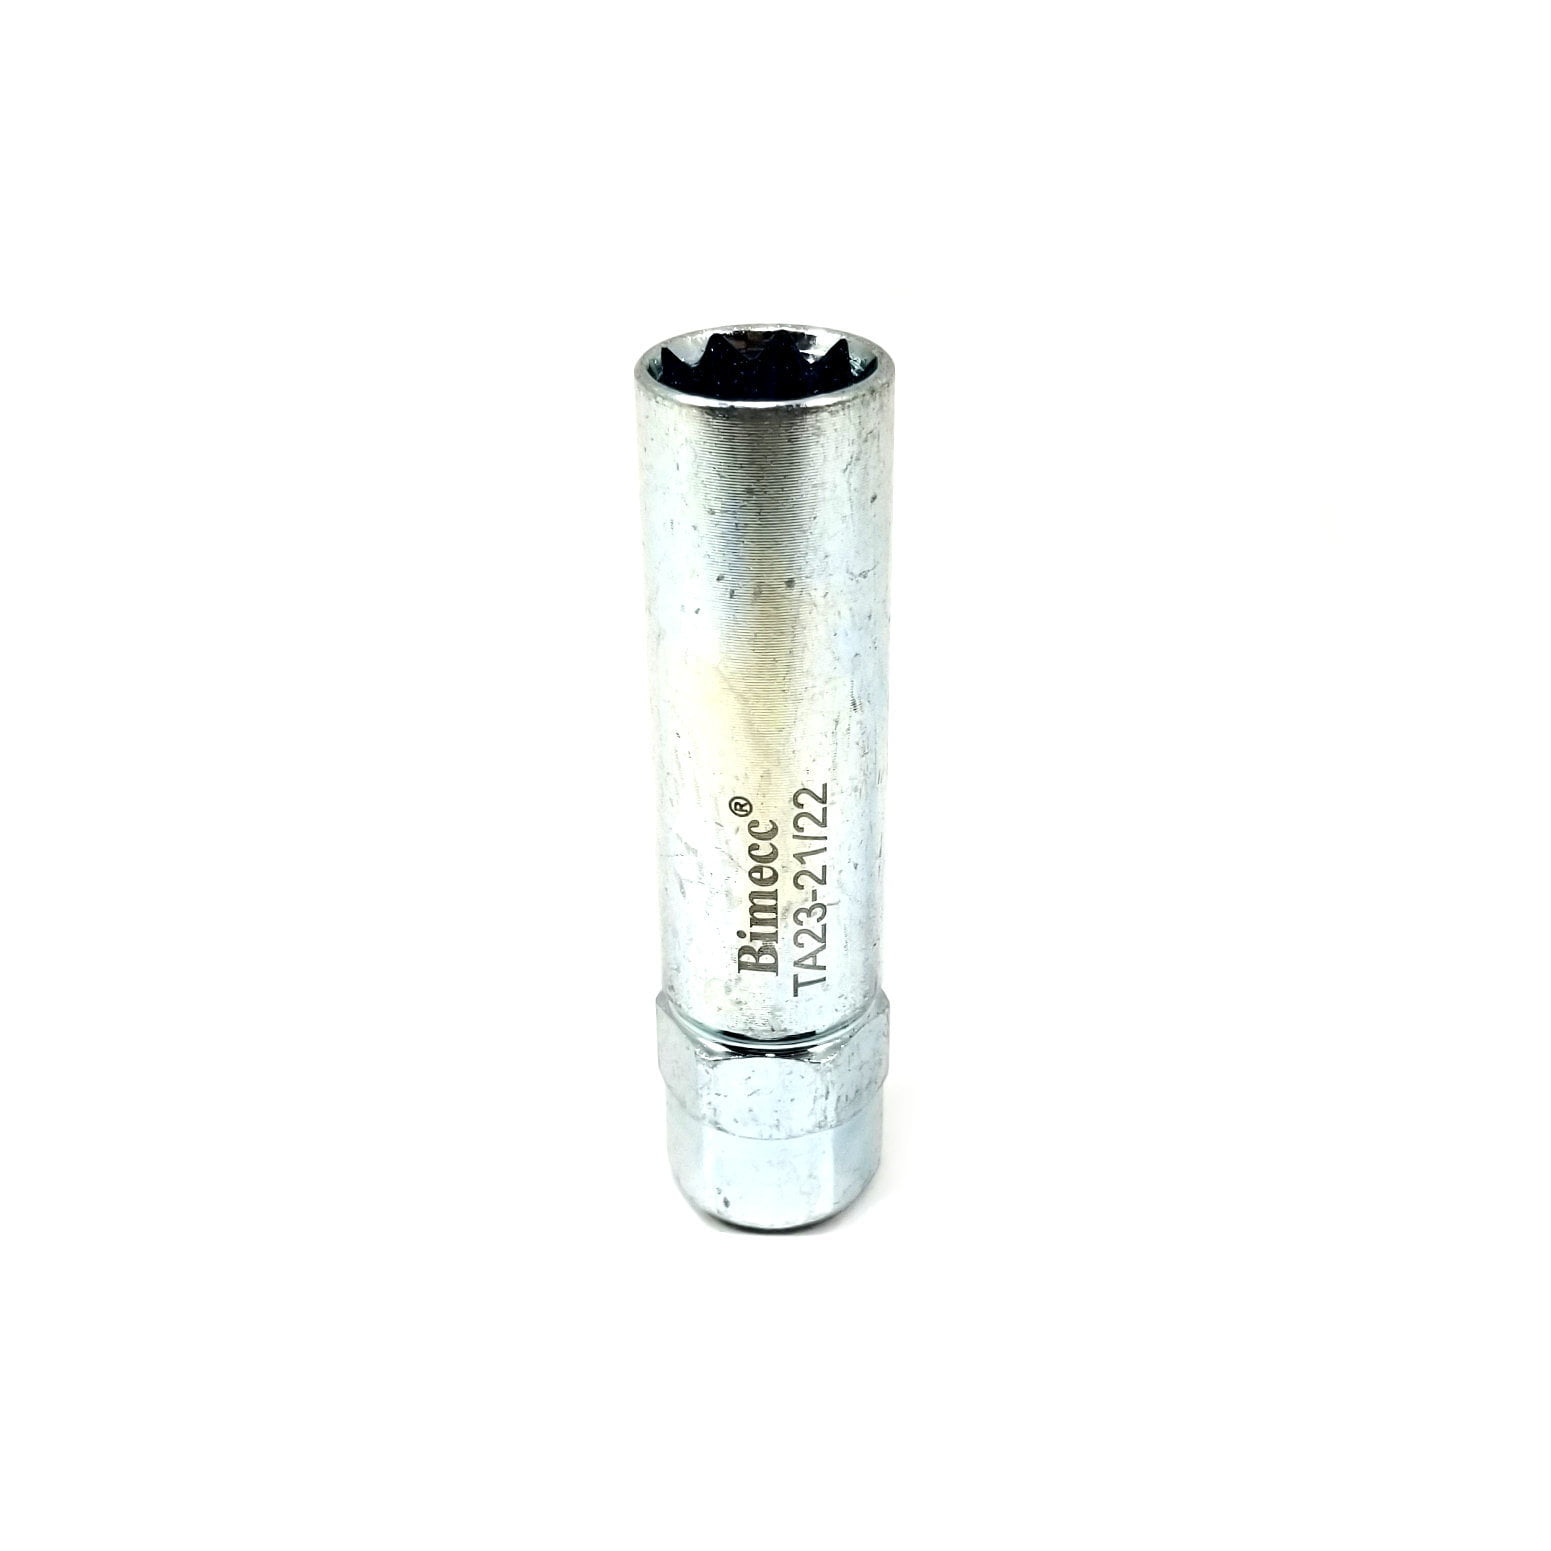 One Hex 1 6 Spline Key Tool for Spline Tuner Lug Nuts 3/4" and 13/16" 21mm 